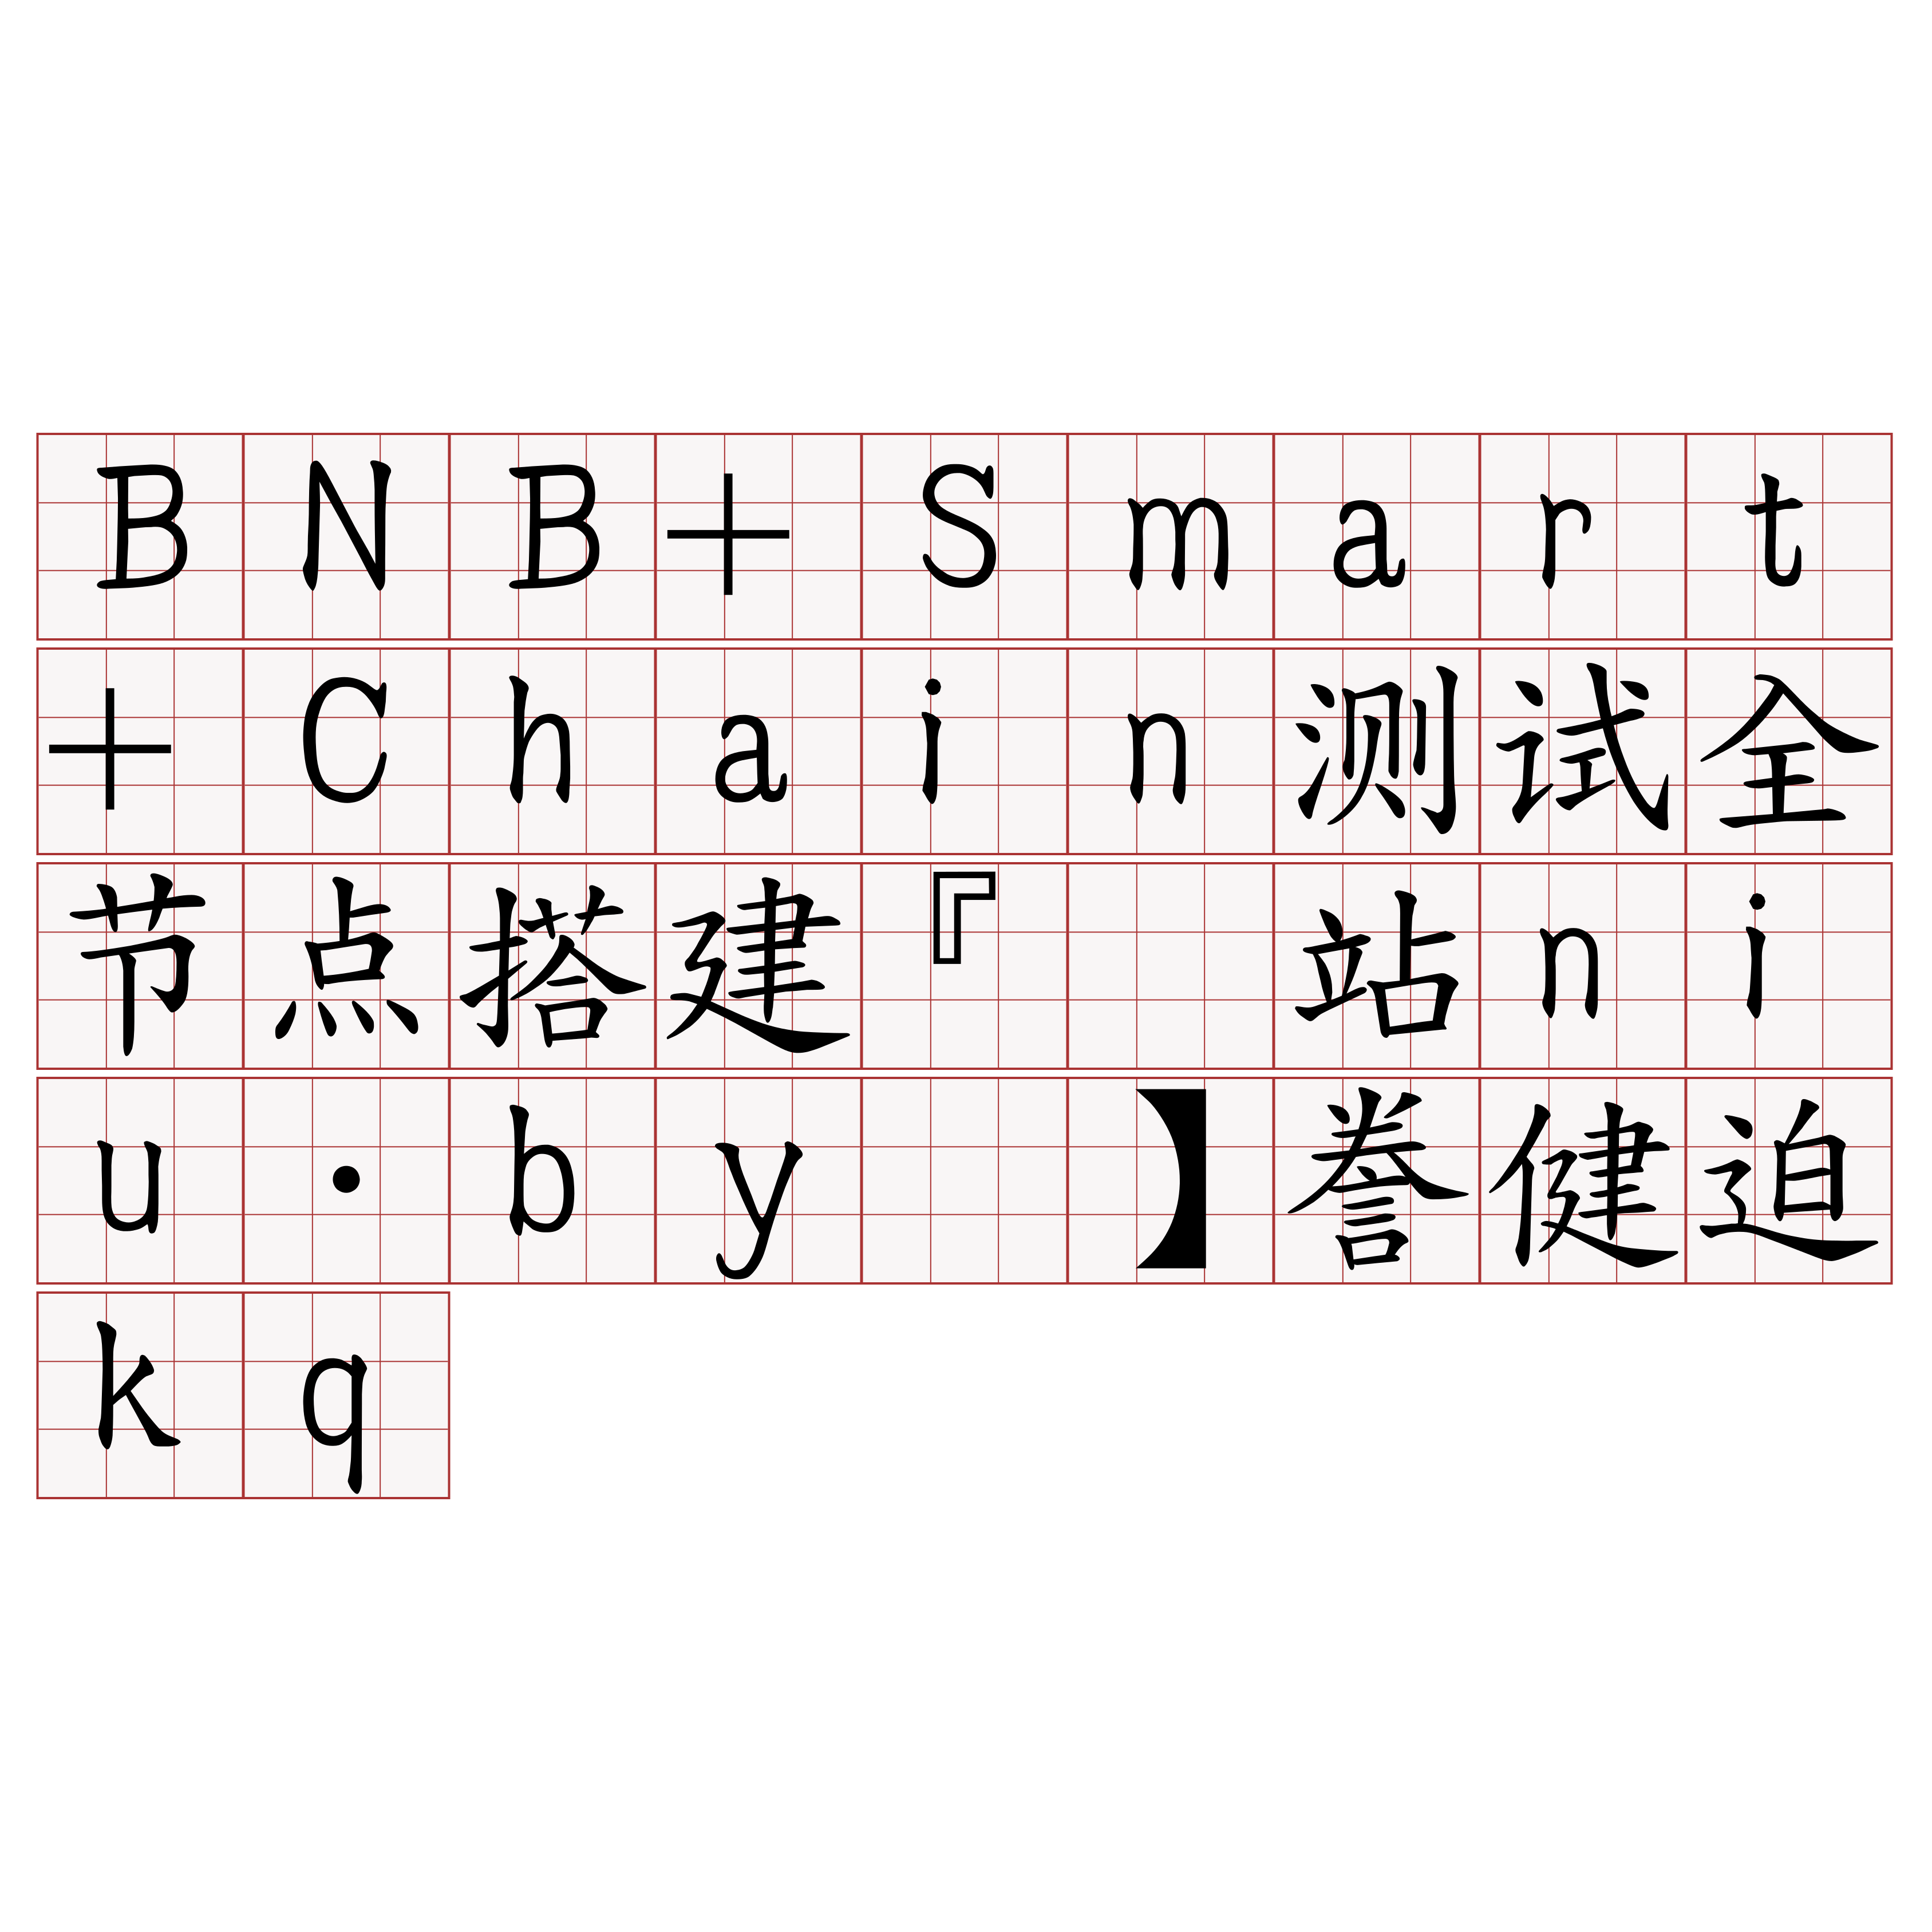 BNB+Smart+Chain测试全节点搭建『🍀网站niu·by🍀』】誊健迫kq